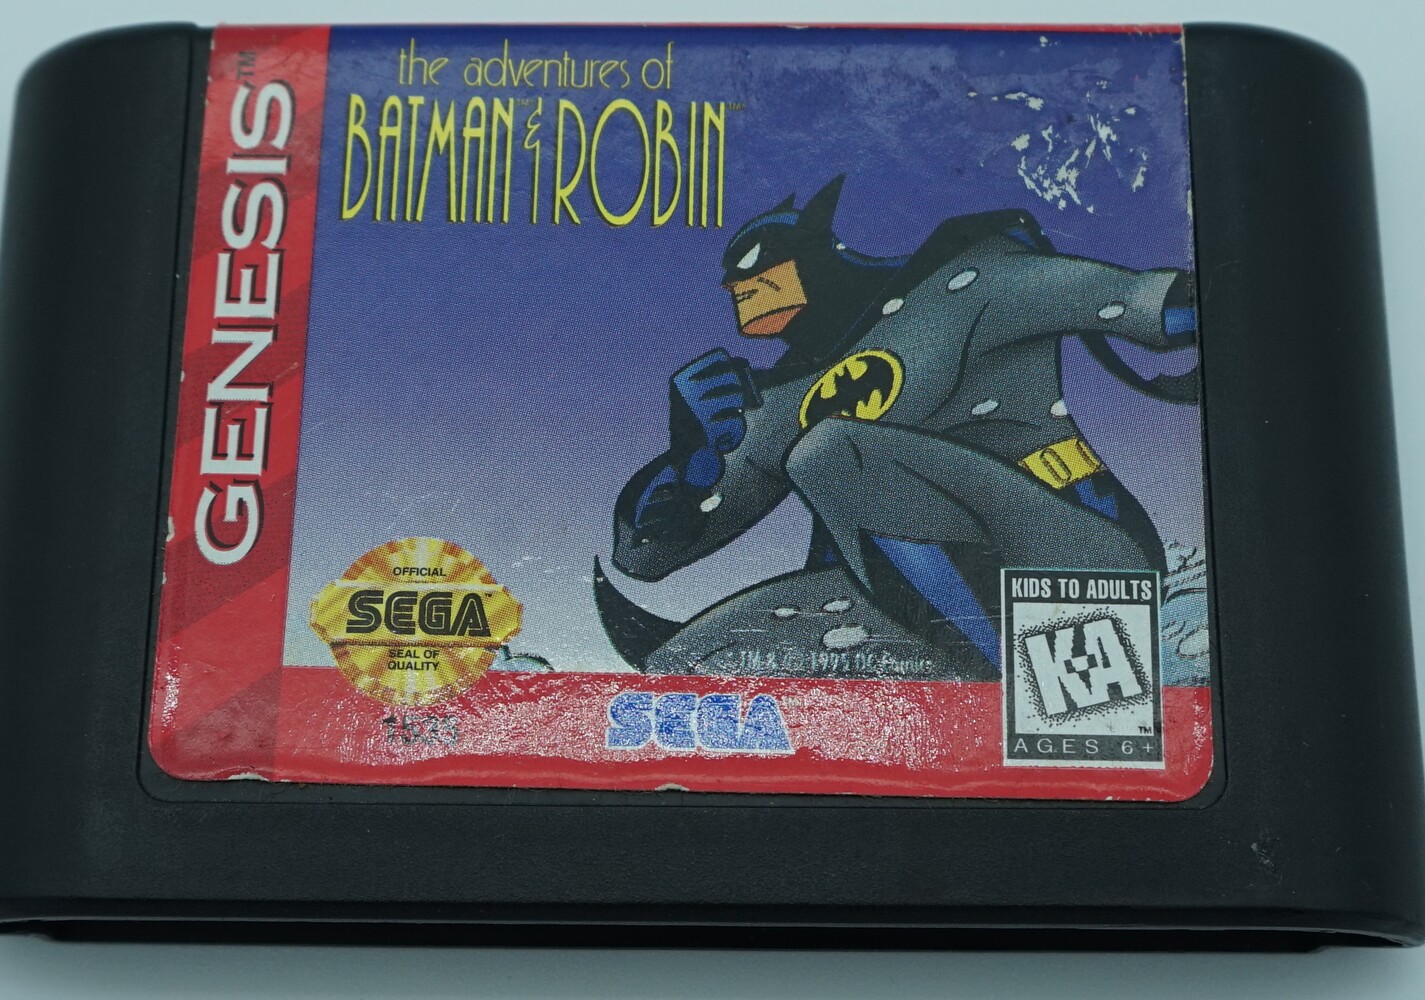 Sega Adventures of batman and robin